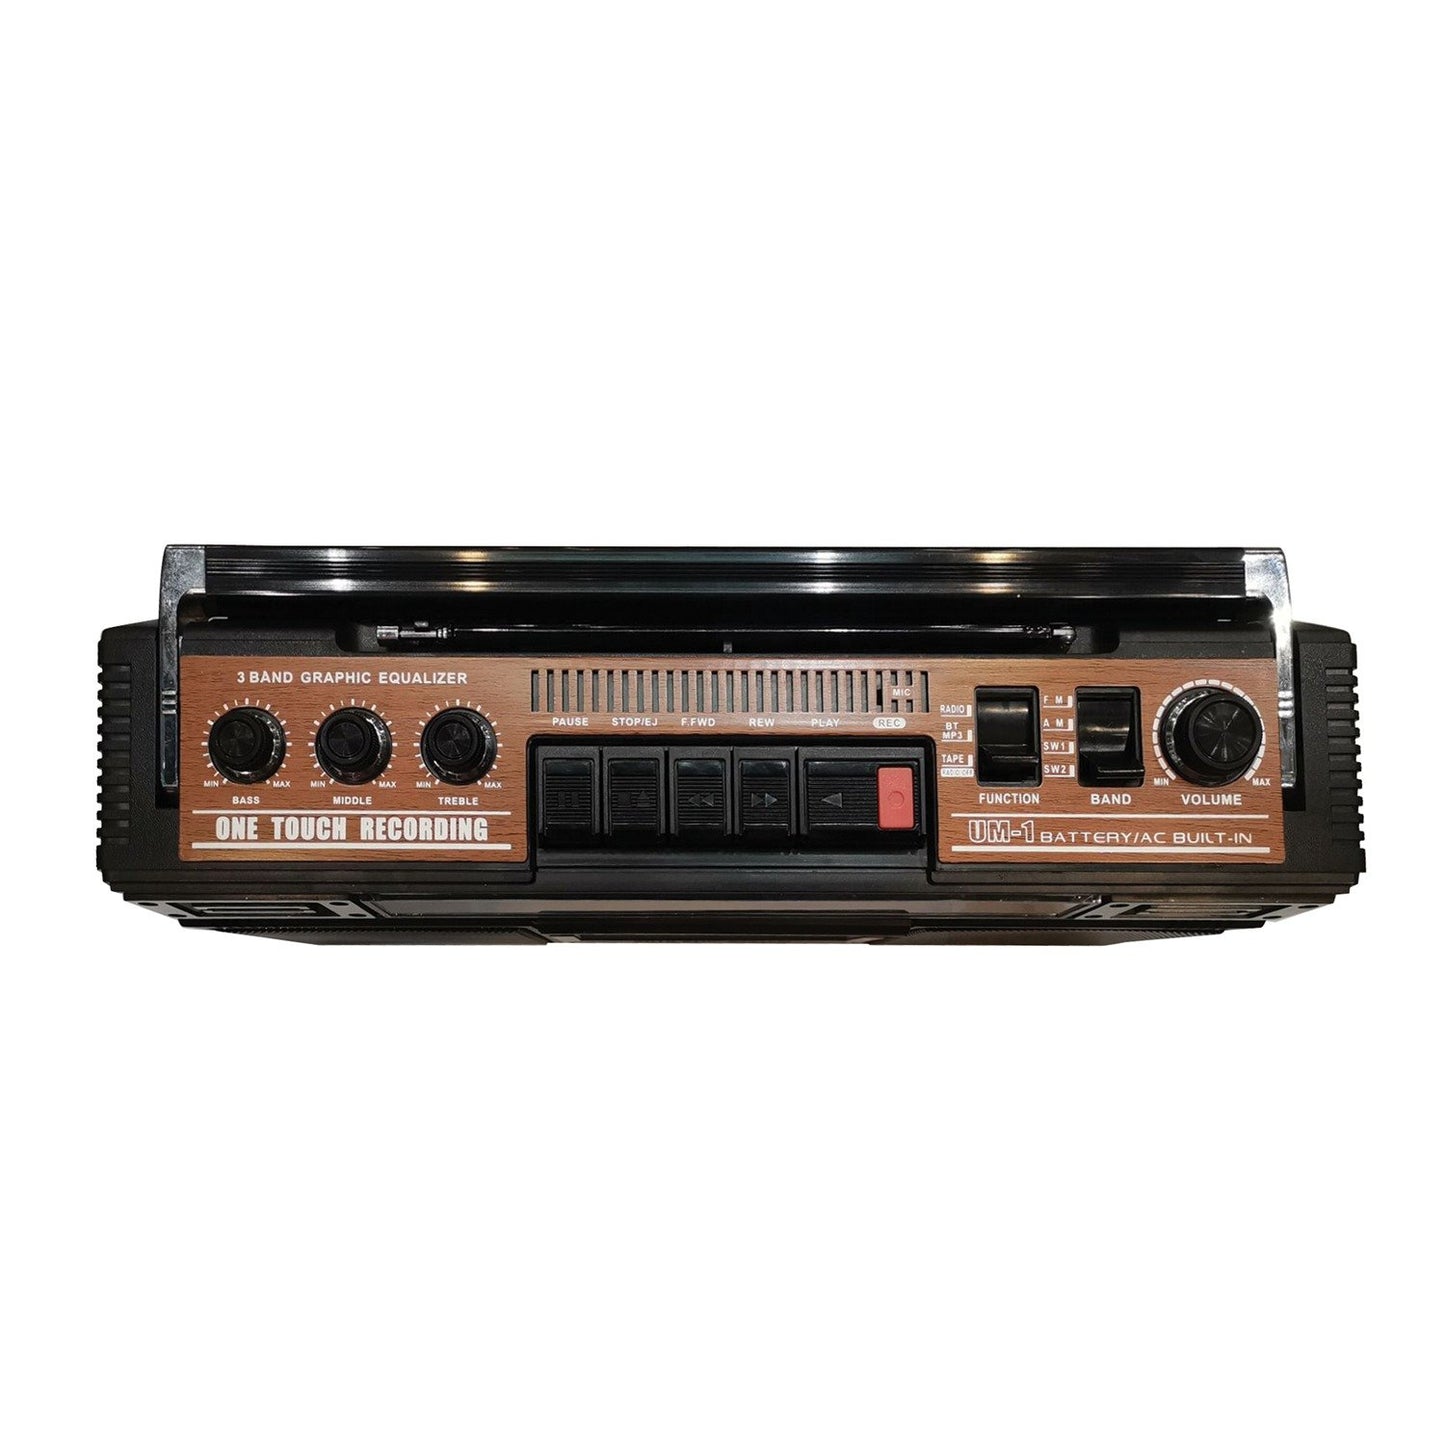 SUPERSONIC SC-3201BT-WD 4 Band Cassette Radio (White)